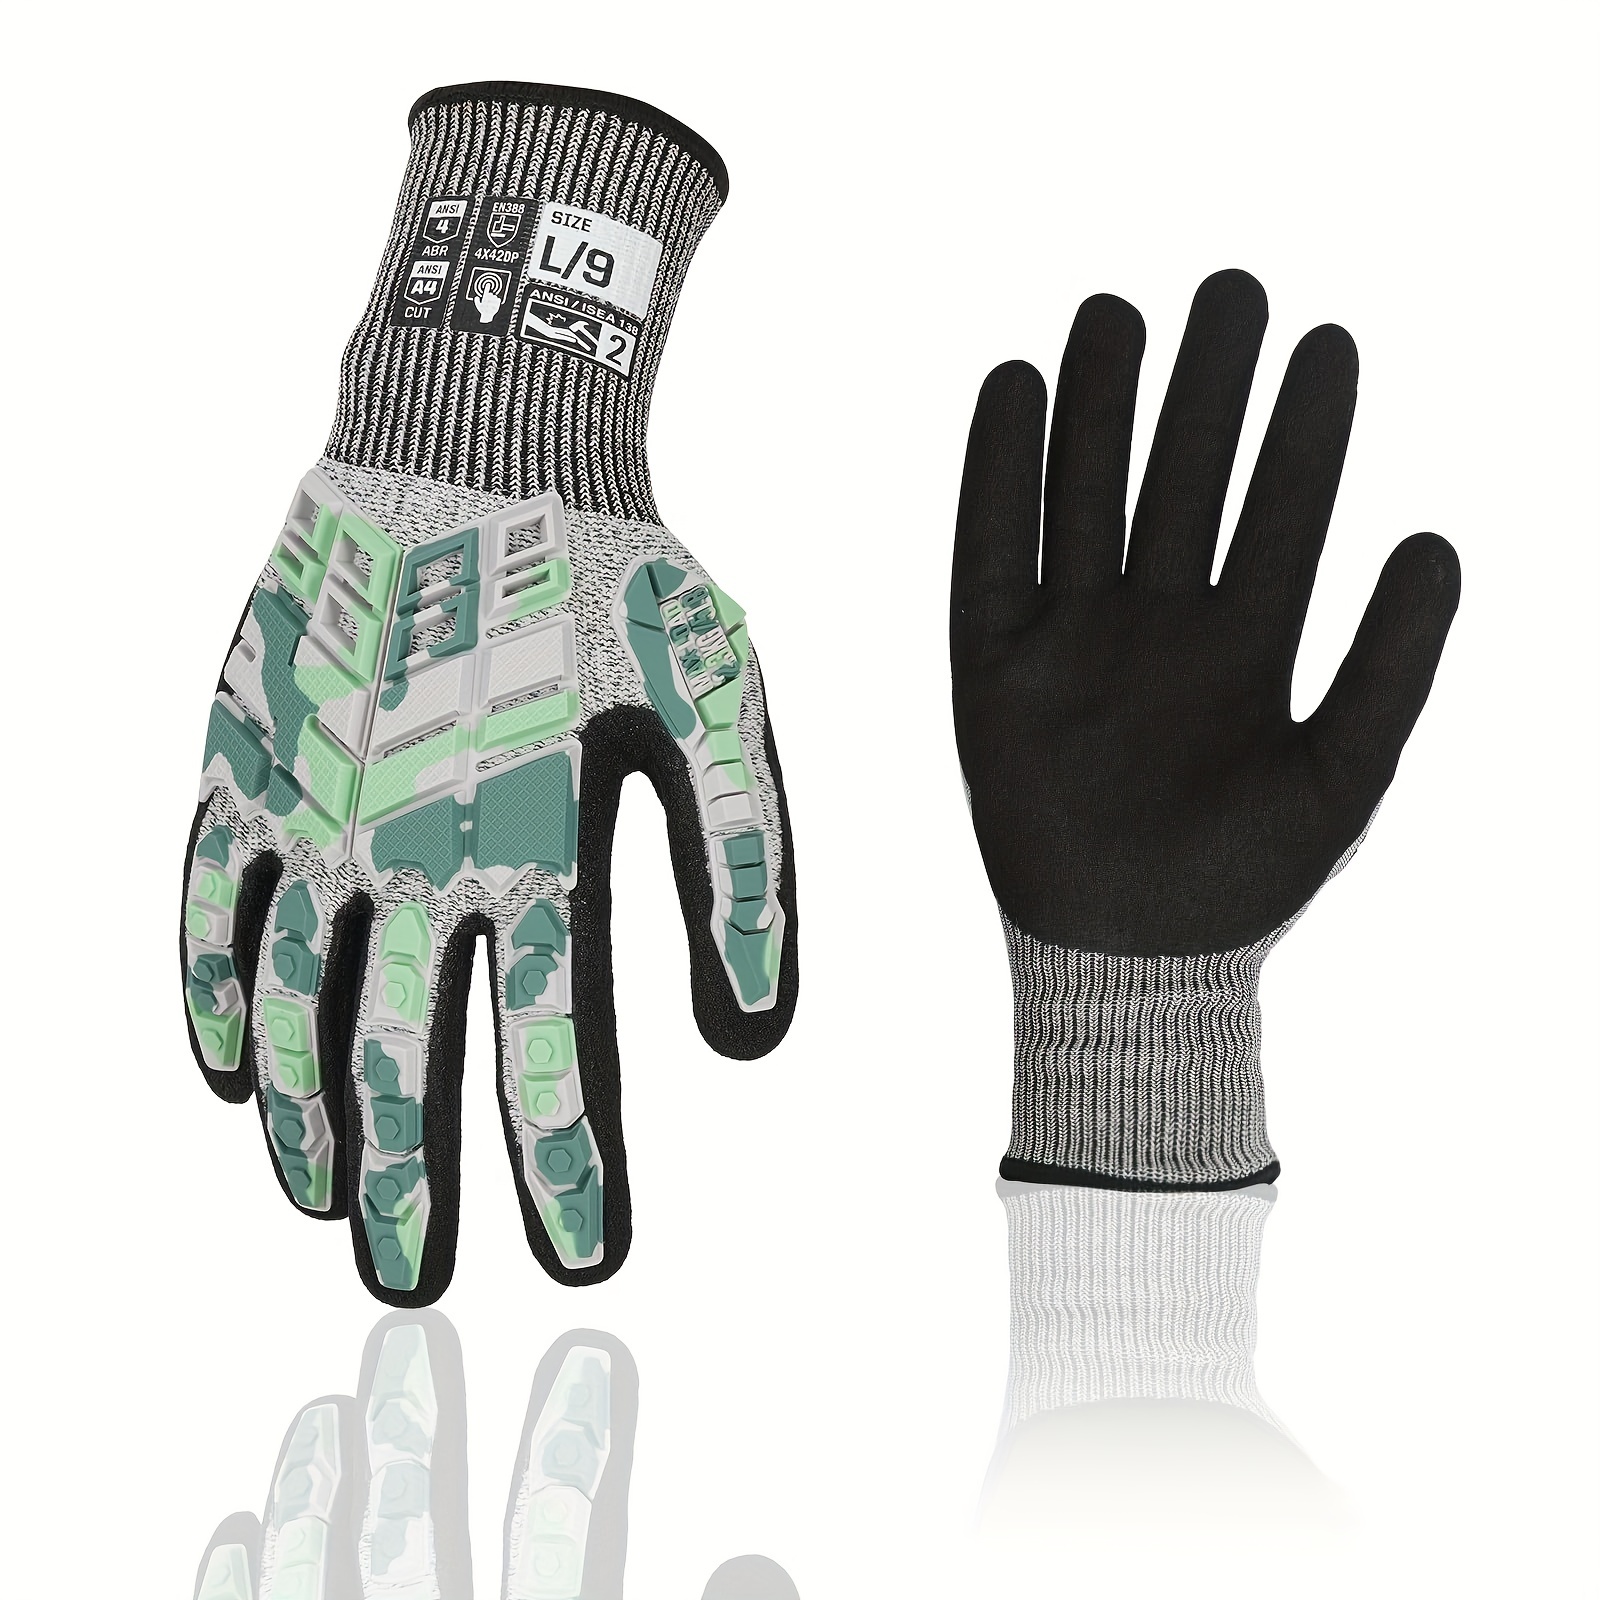 Heavy Duty Work Gloves Tpr Protector Impact Gloves Men Women - Temu